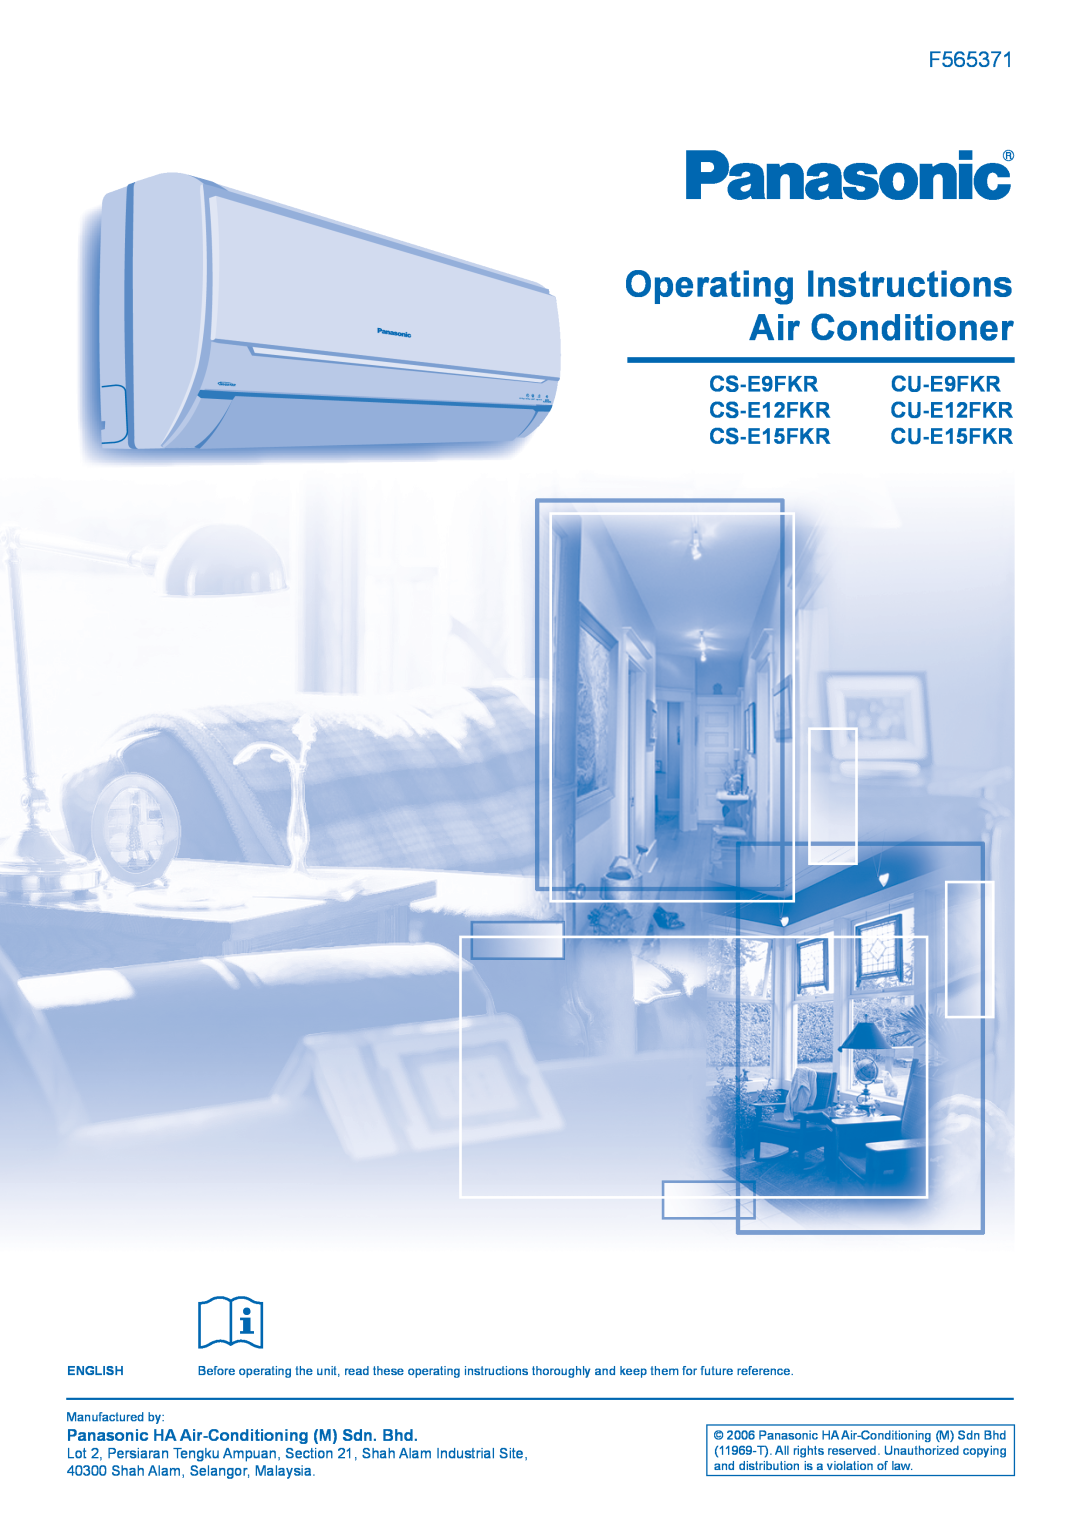 Panasonic CU-E15FKR manual Operating Instructions Air Conditioner, F565371, CS-E9FKR CU-E9FKR CS-E12FKR CU-E12FKR, English 